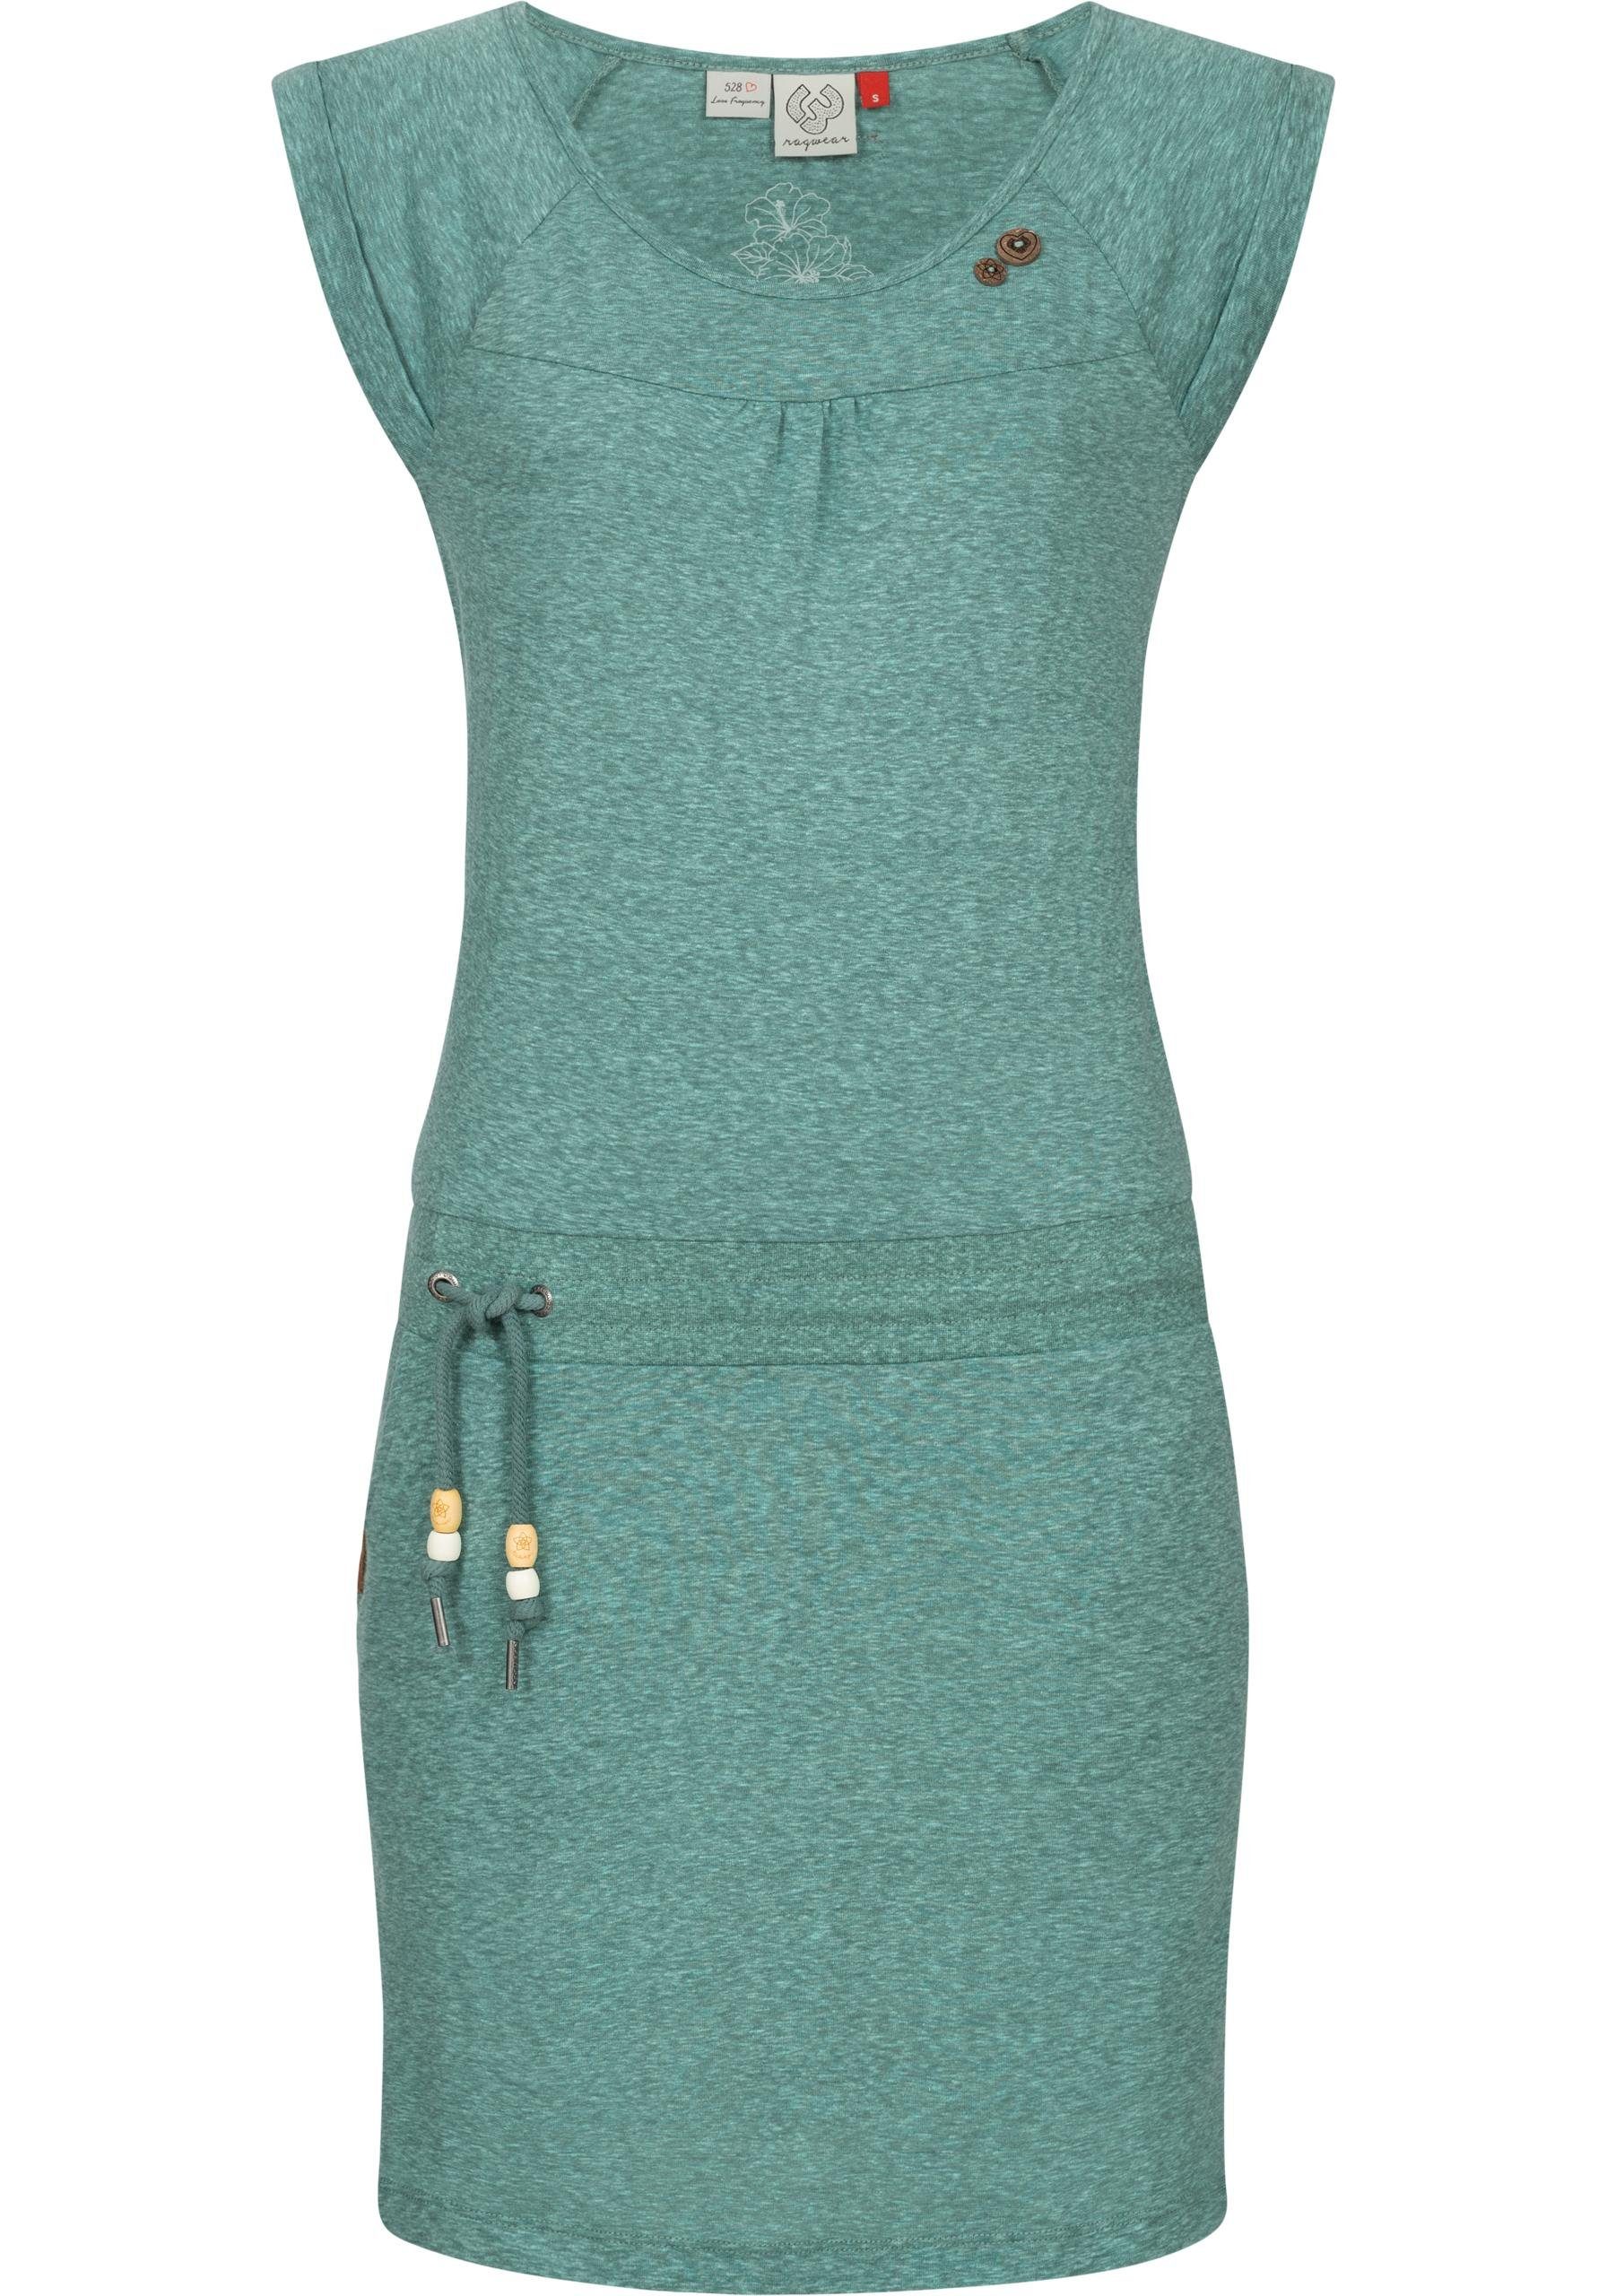 Ragwear Sommerkleid Penelope leichtes Baumwoll Kleid mit Print türkis | Wickelkleider